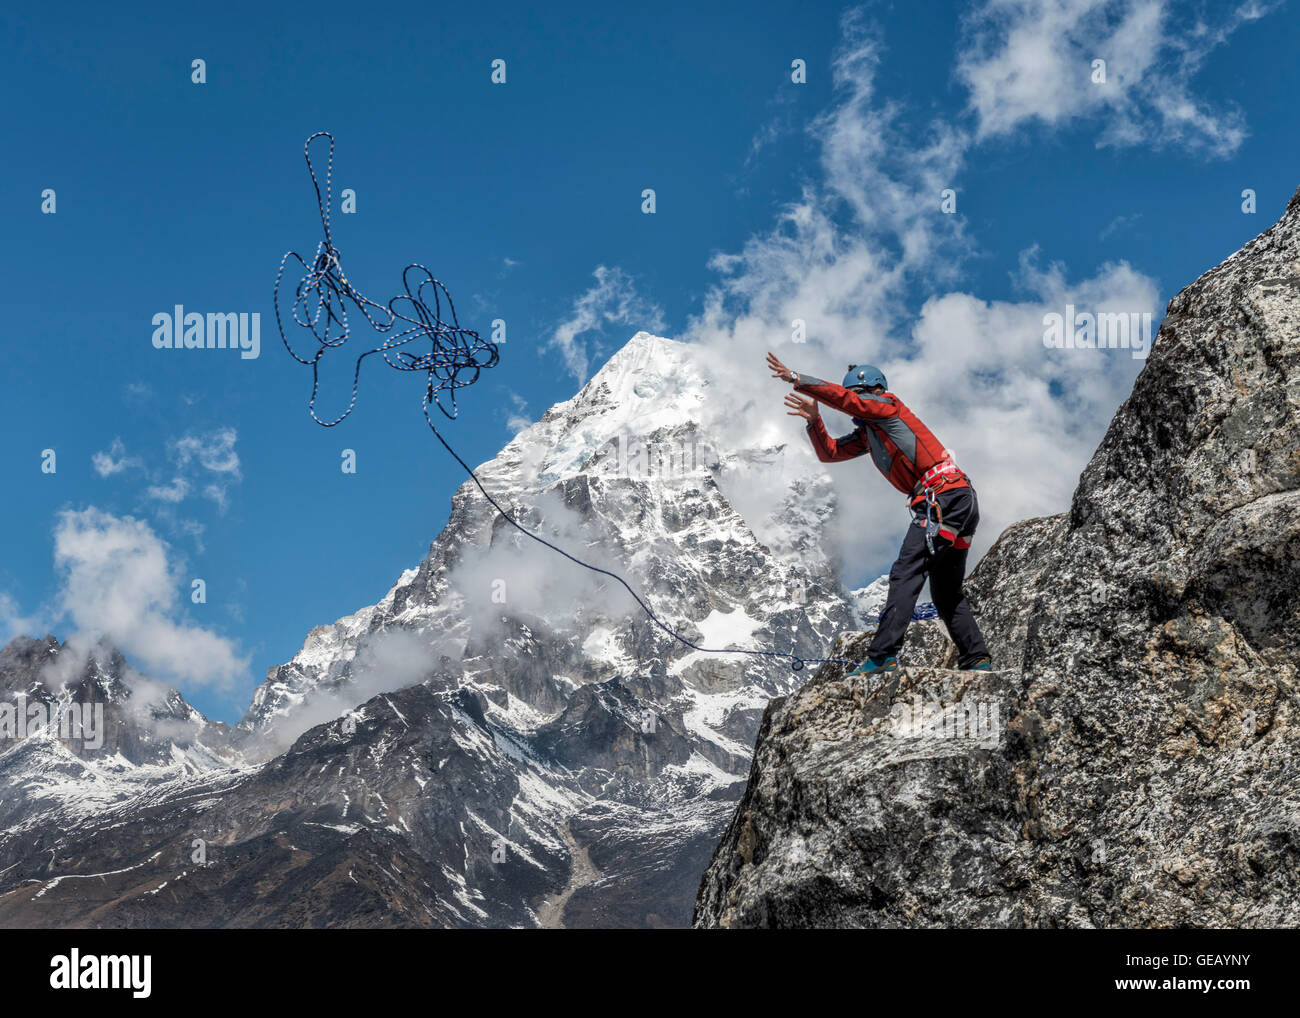 nepal-himalaya-solo-khumbu-ama-dablam-man-standing-on-rock-throwing-GEAYNY.jpg